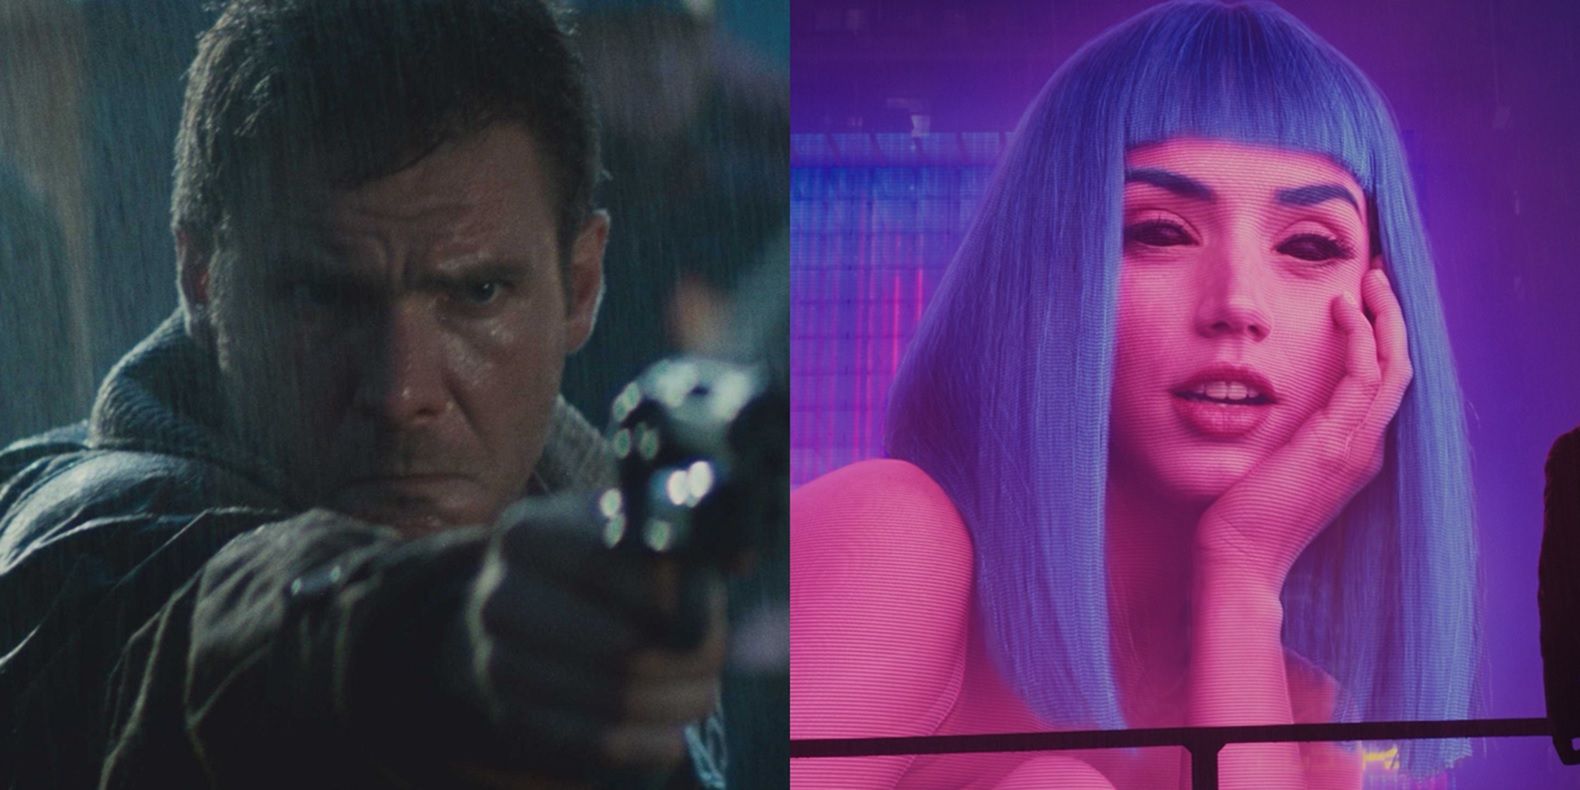 Harrison Ford in Blade Runner and Ana de Armas in Blade Runner 2049